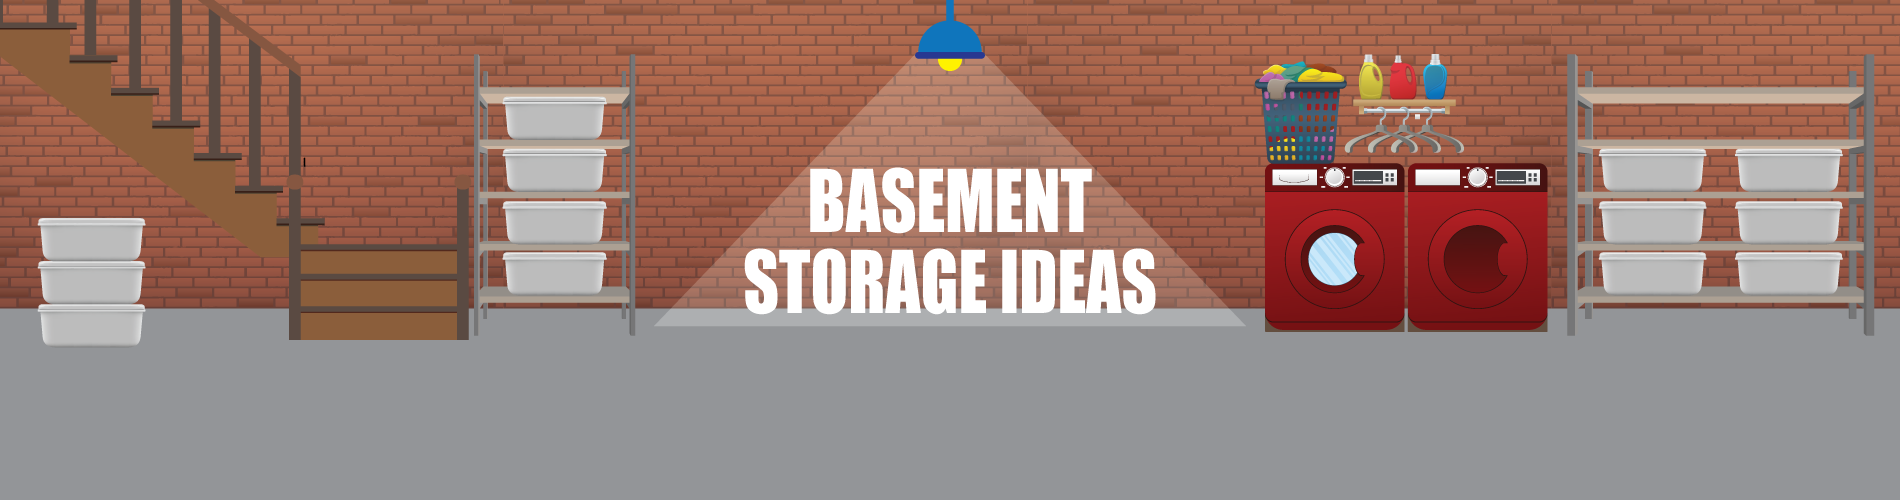 basement storage ideas from Hogan Self Storage in Pennington NJ